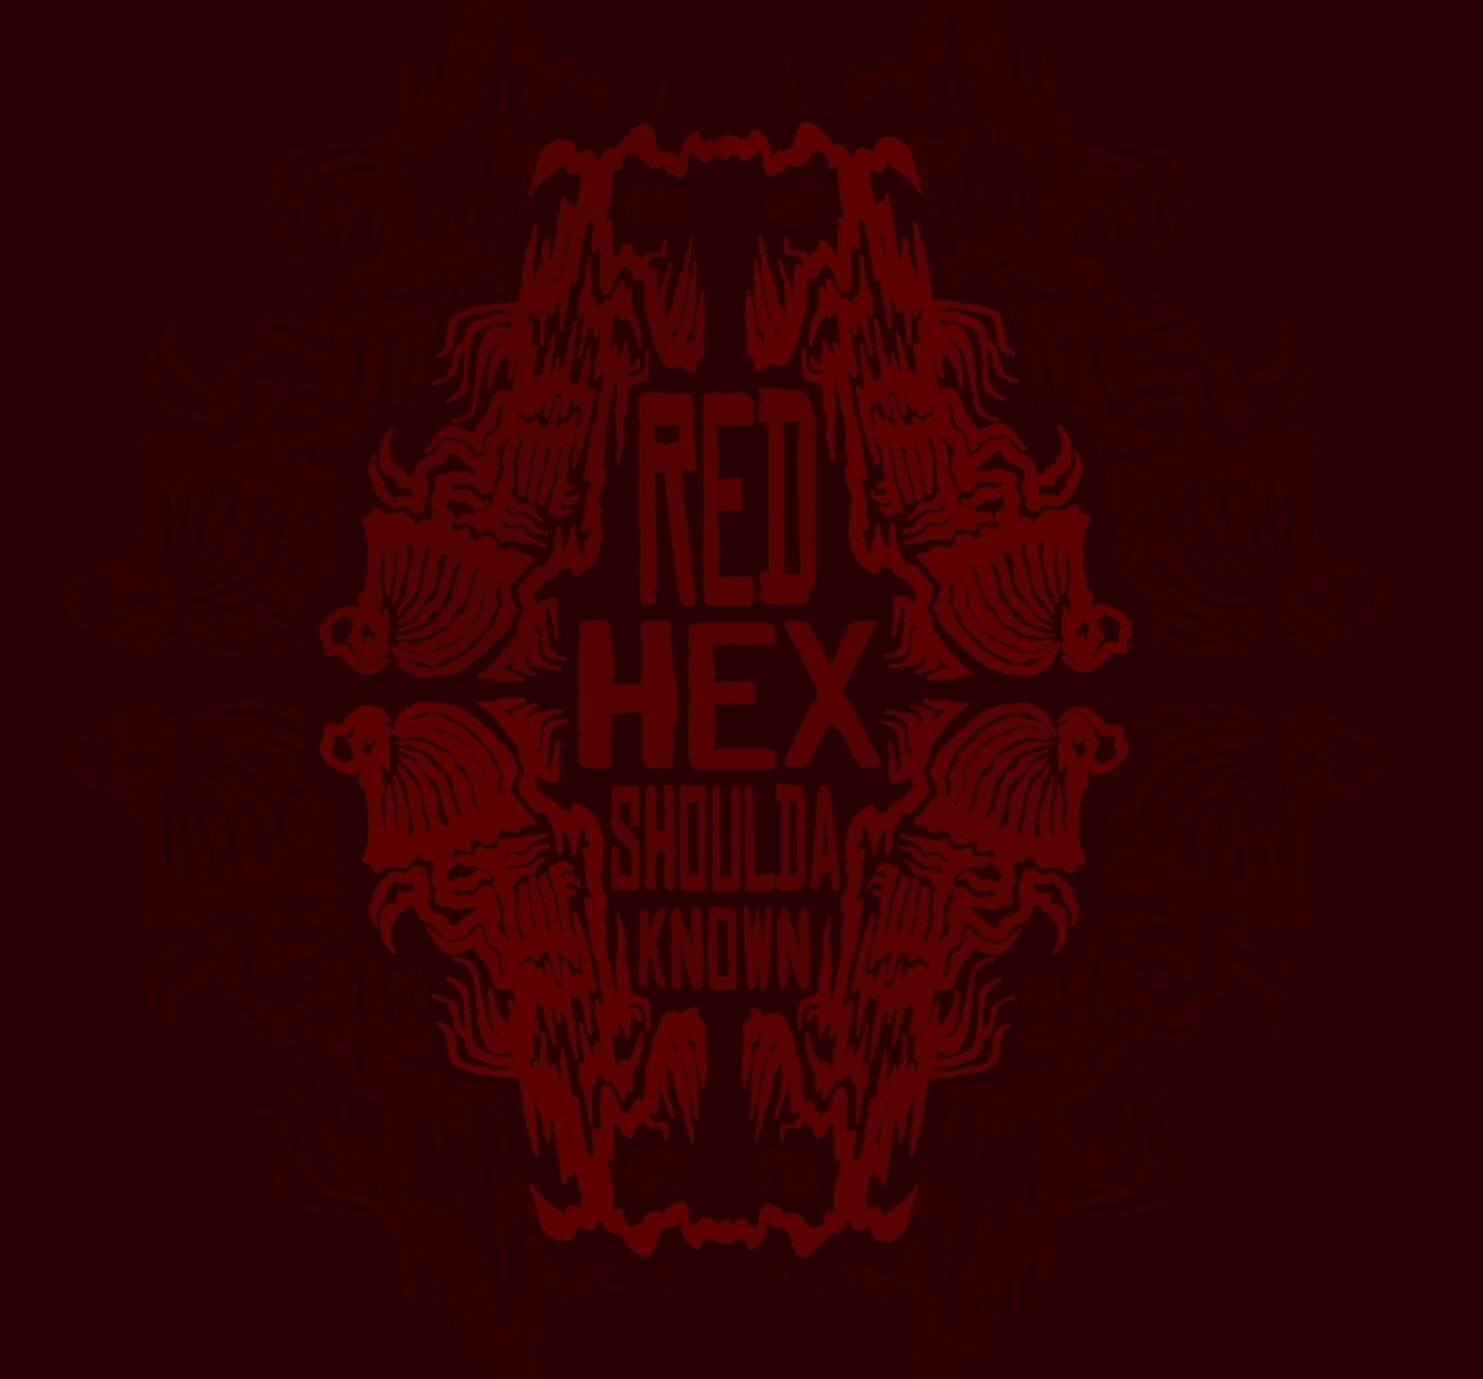 Red Hex - Shoulda Known 7" (red vinyl)